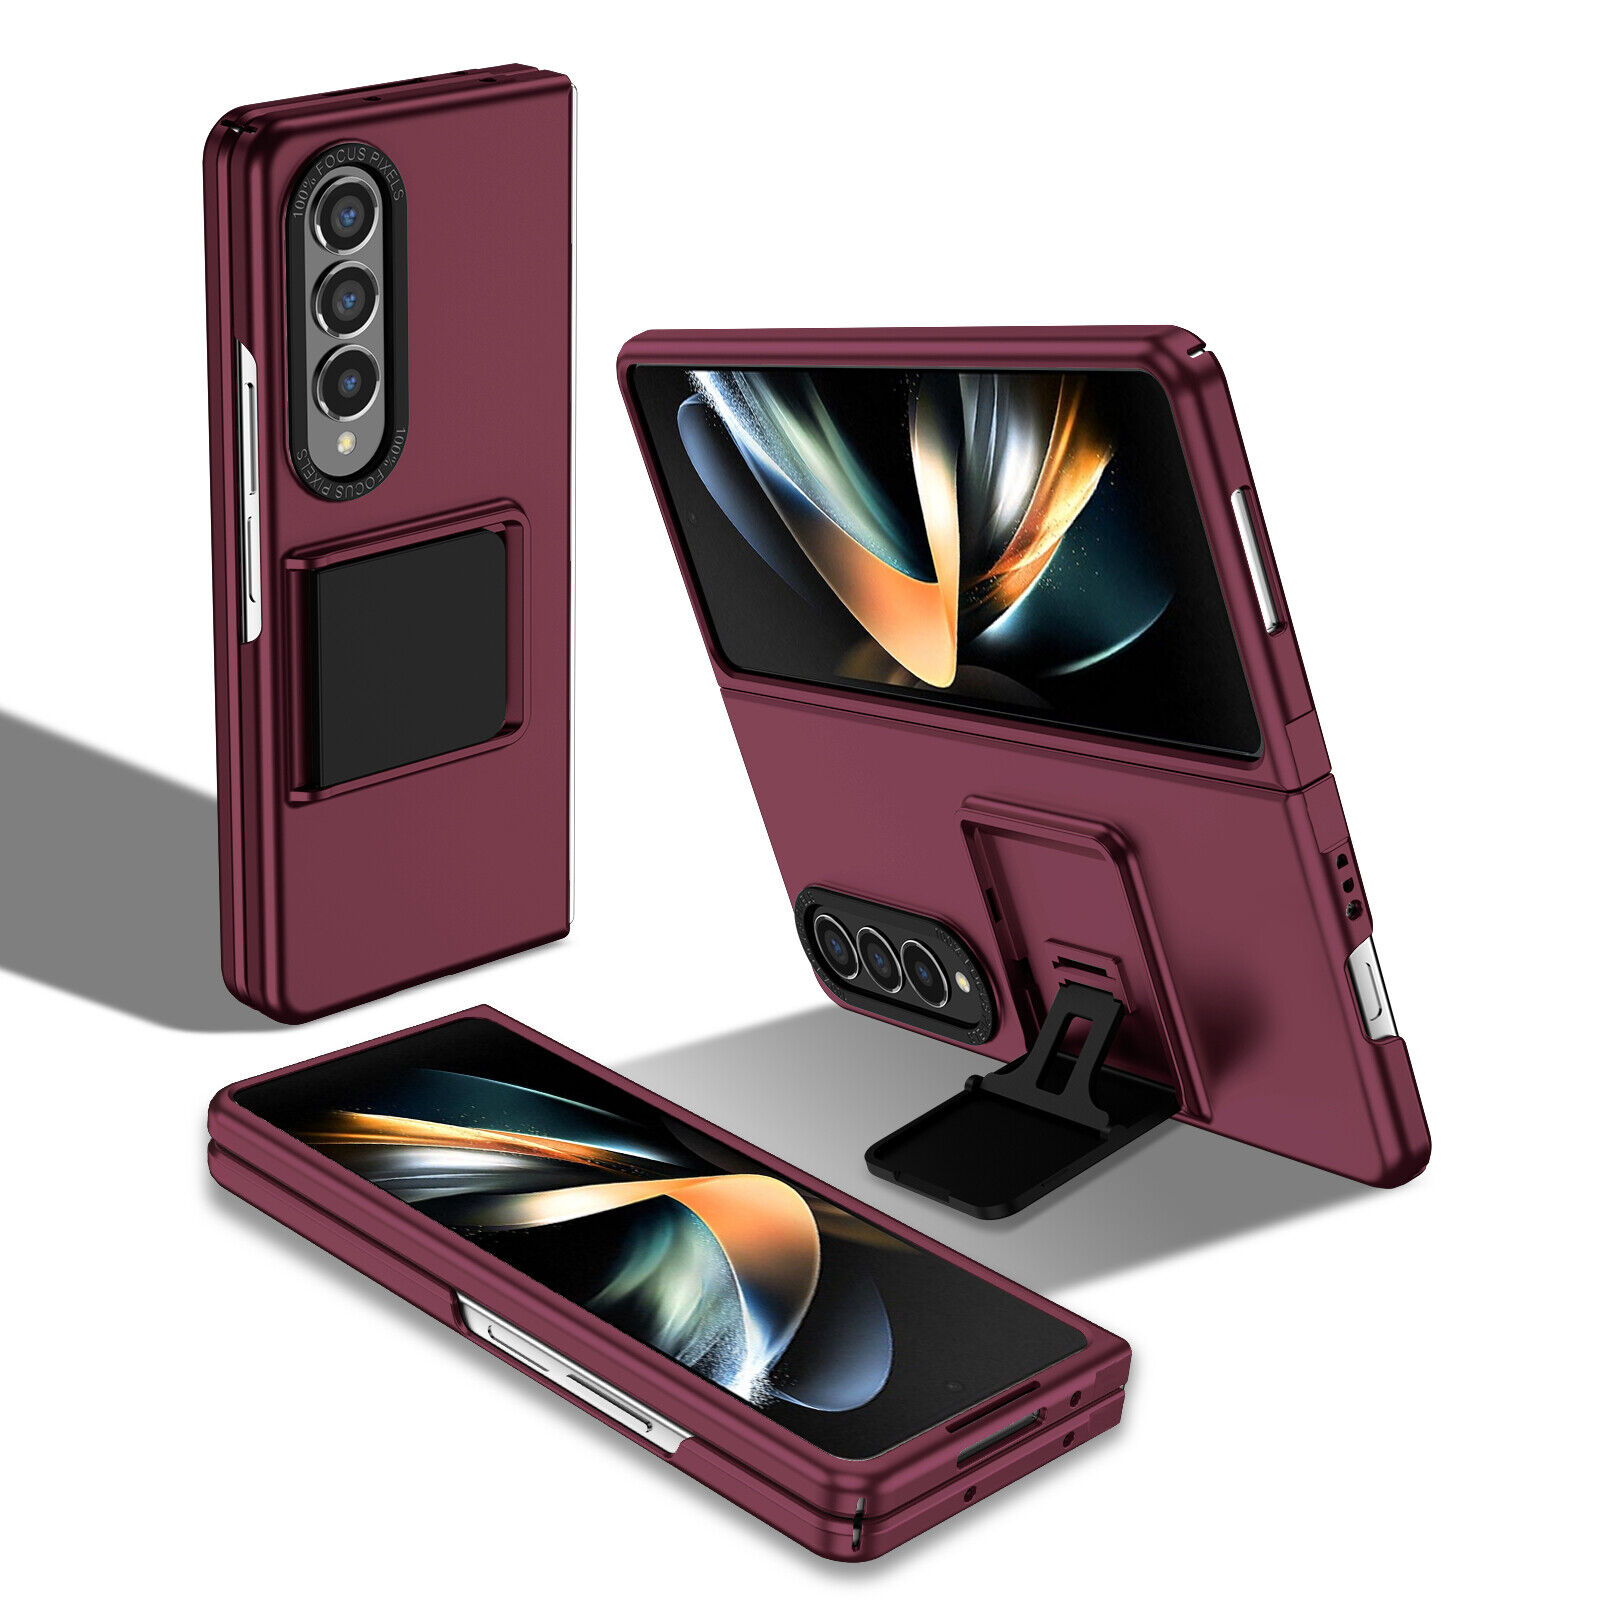 Samsung Galaxy Z Fold 4 Fold 3 5G Shockproof Case Slim Fold Stand Hard Cover